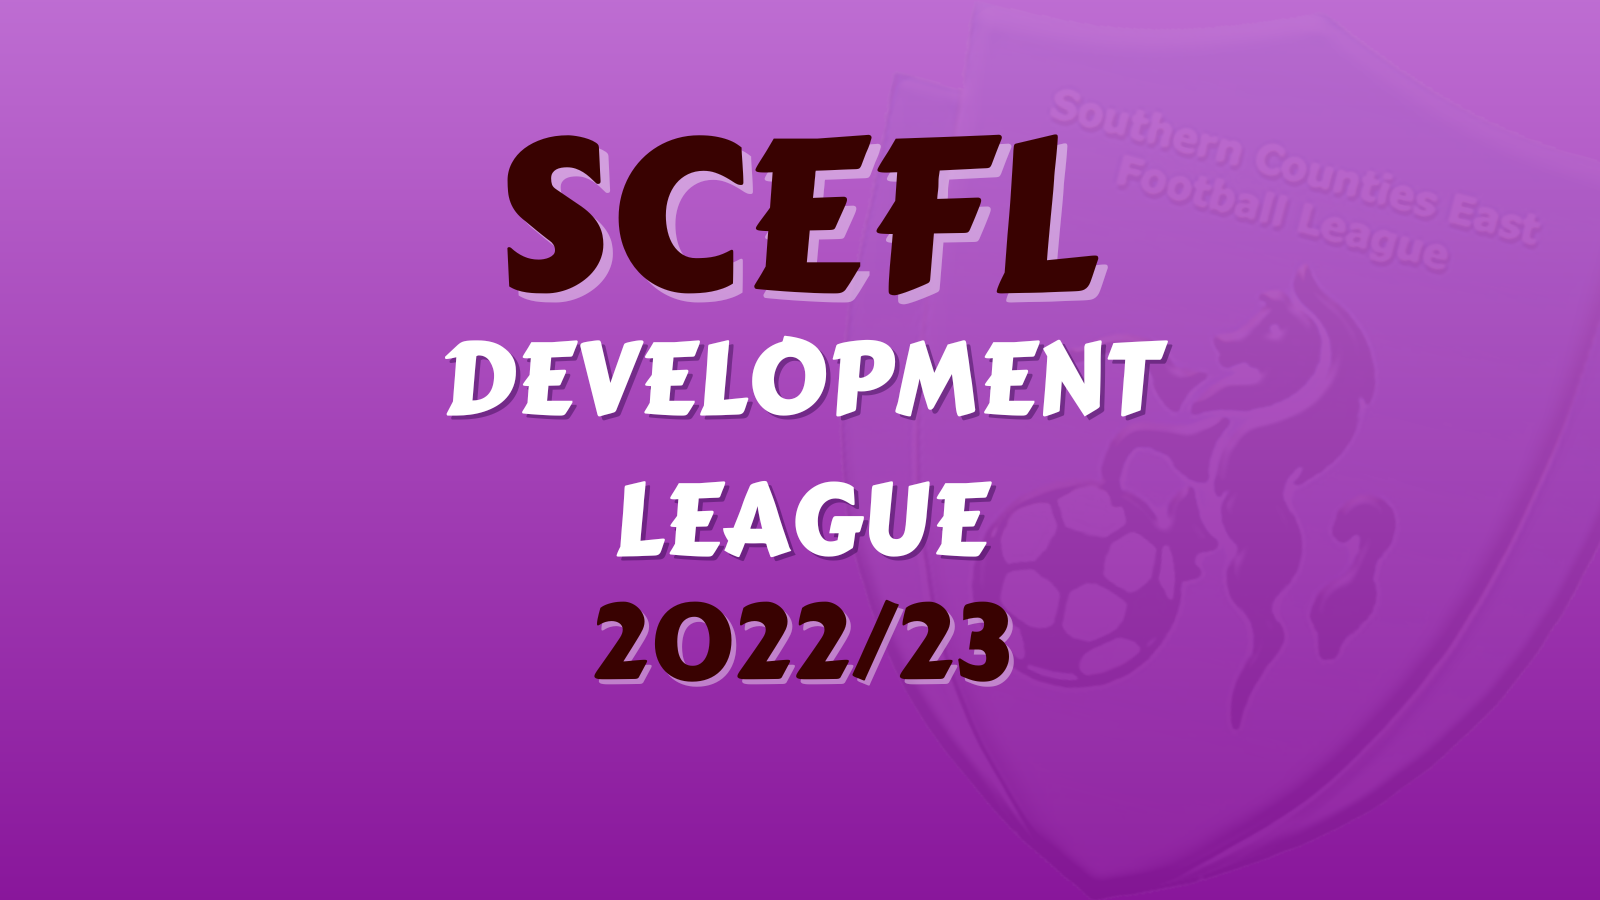 Development League 2022/23